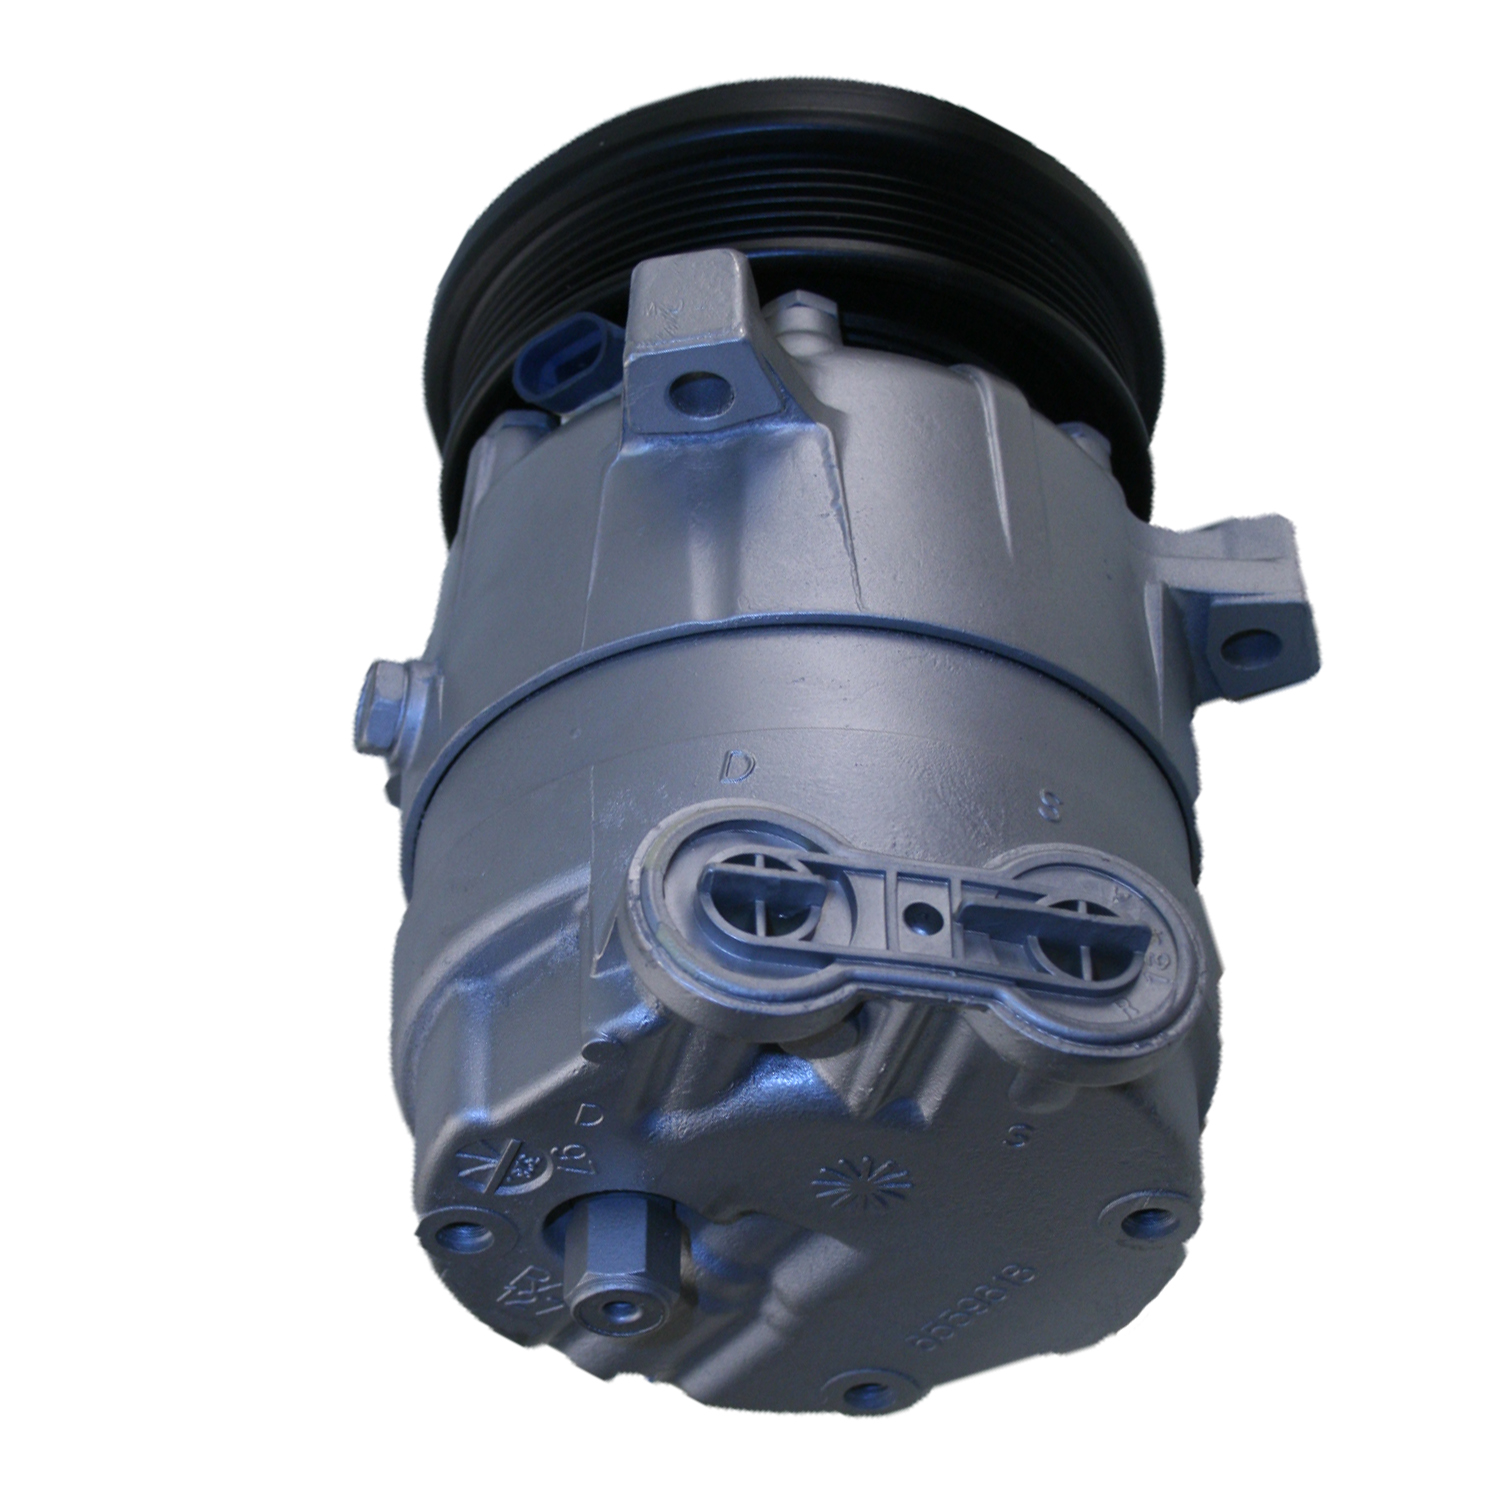 TCW Compressor 15-4006R Remanufactured Product Image field_60b6a13a6e67c